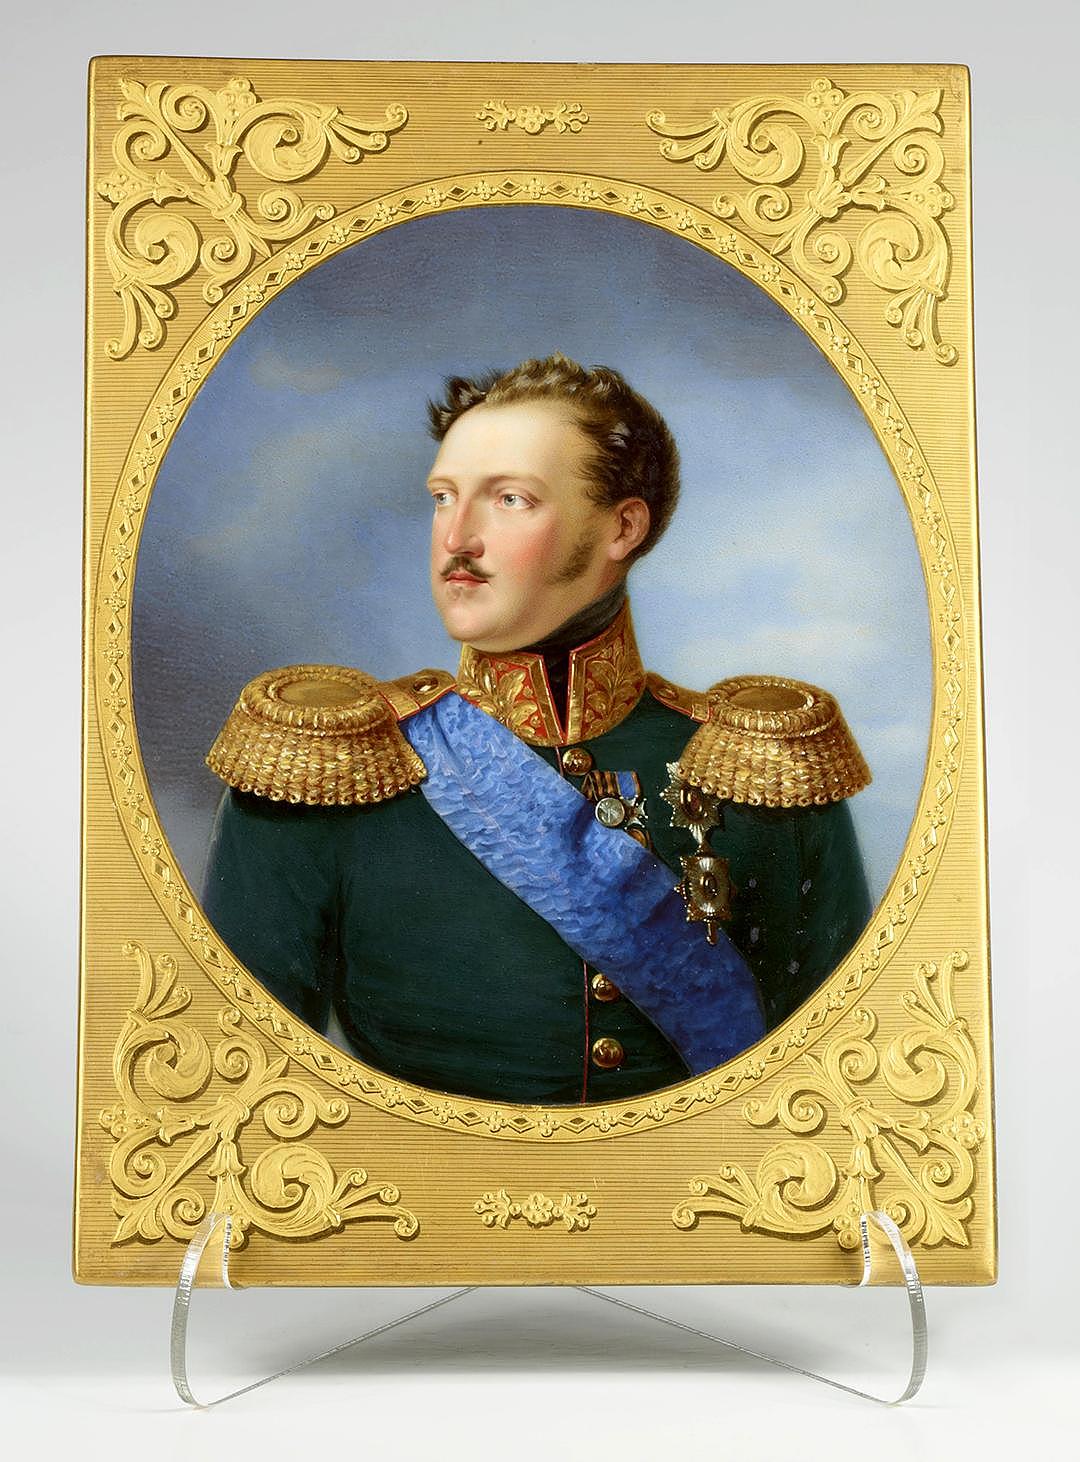 A plaque with a portrait of Emperor Nicholas I, porcelain, overglaze painting, gilding